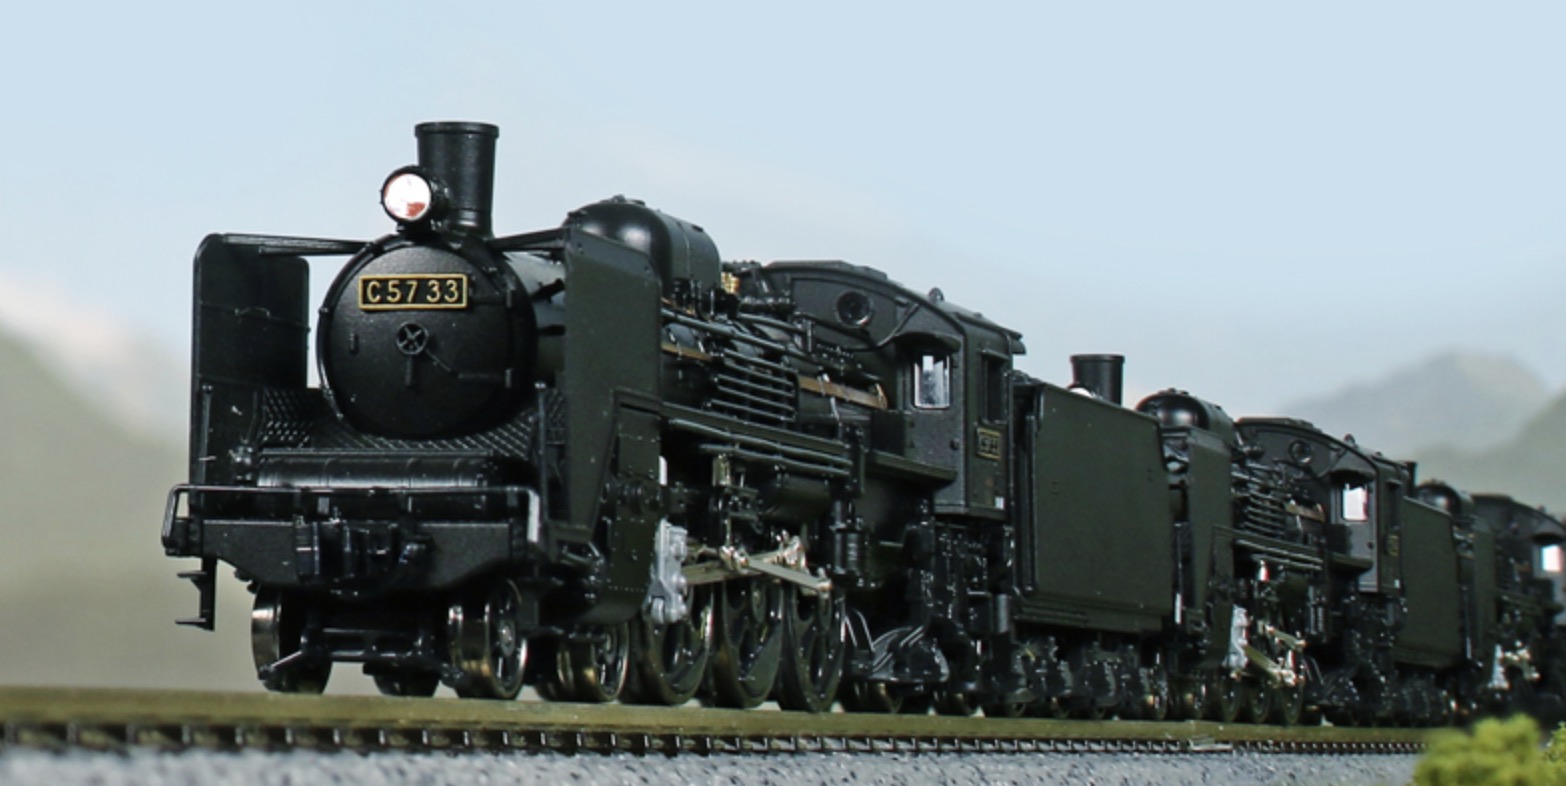 N Scale - Kato - 2024 - Locomotive, Steam, 4-6-2, C57 - Japanese National Railways - C57 33